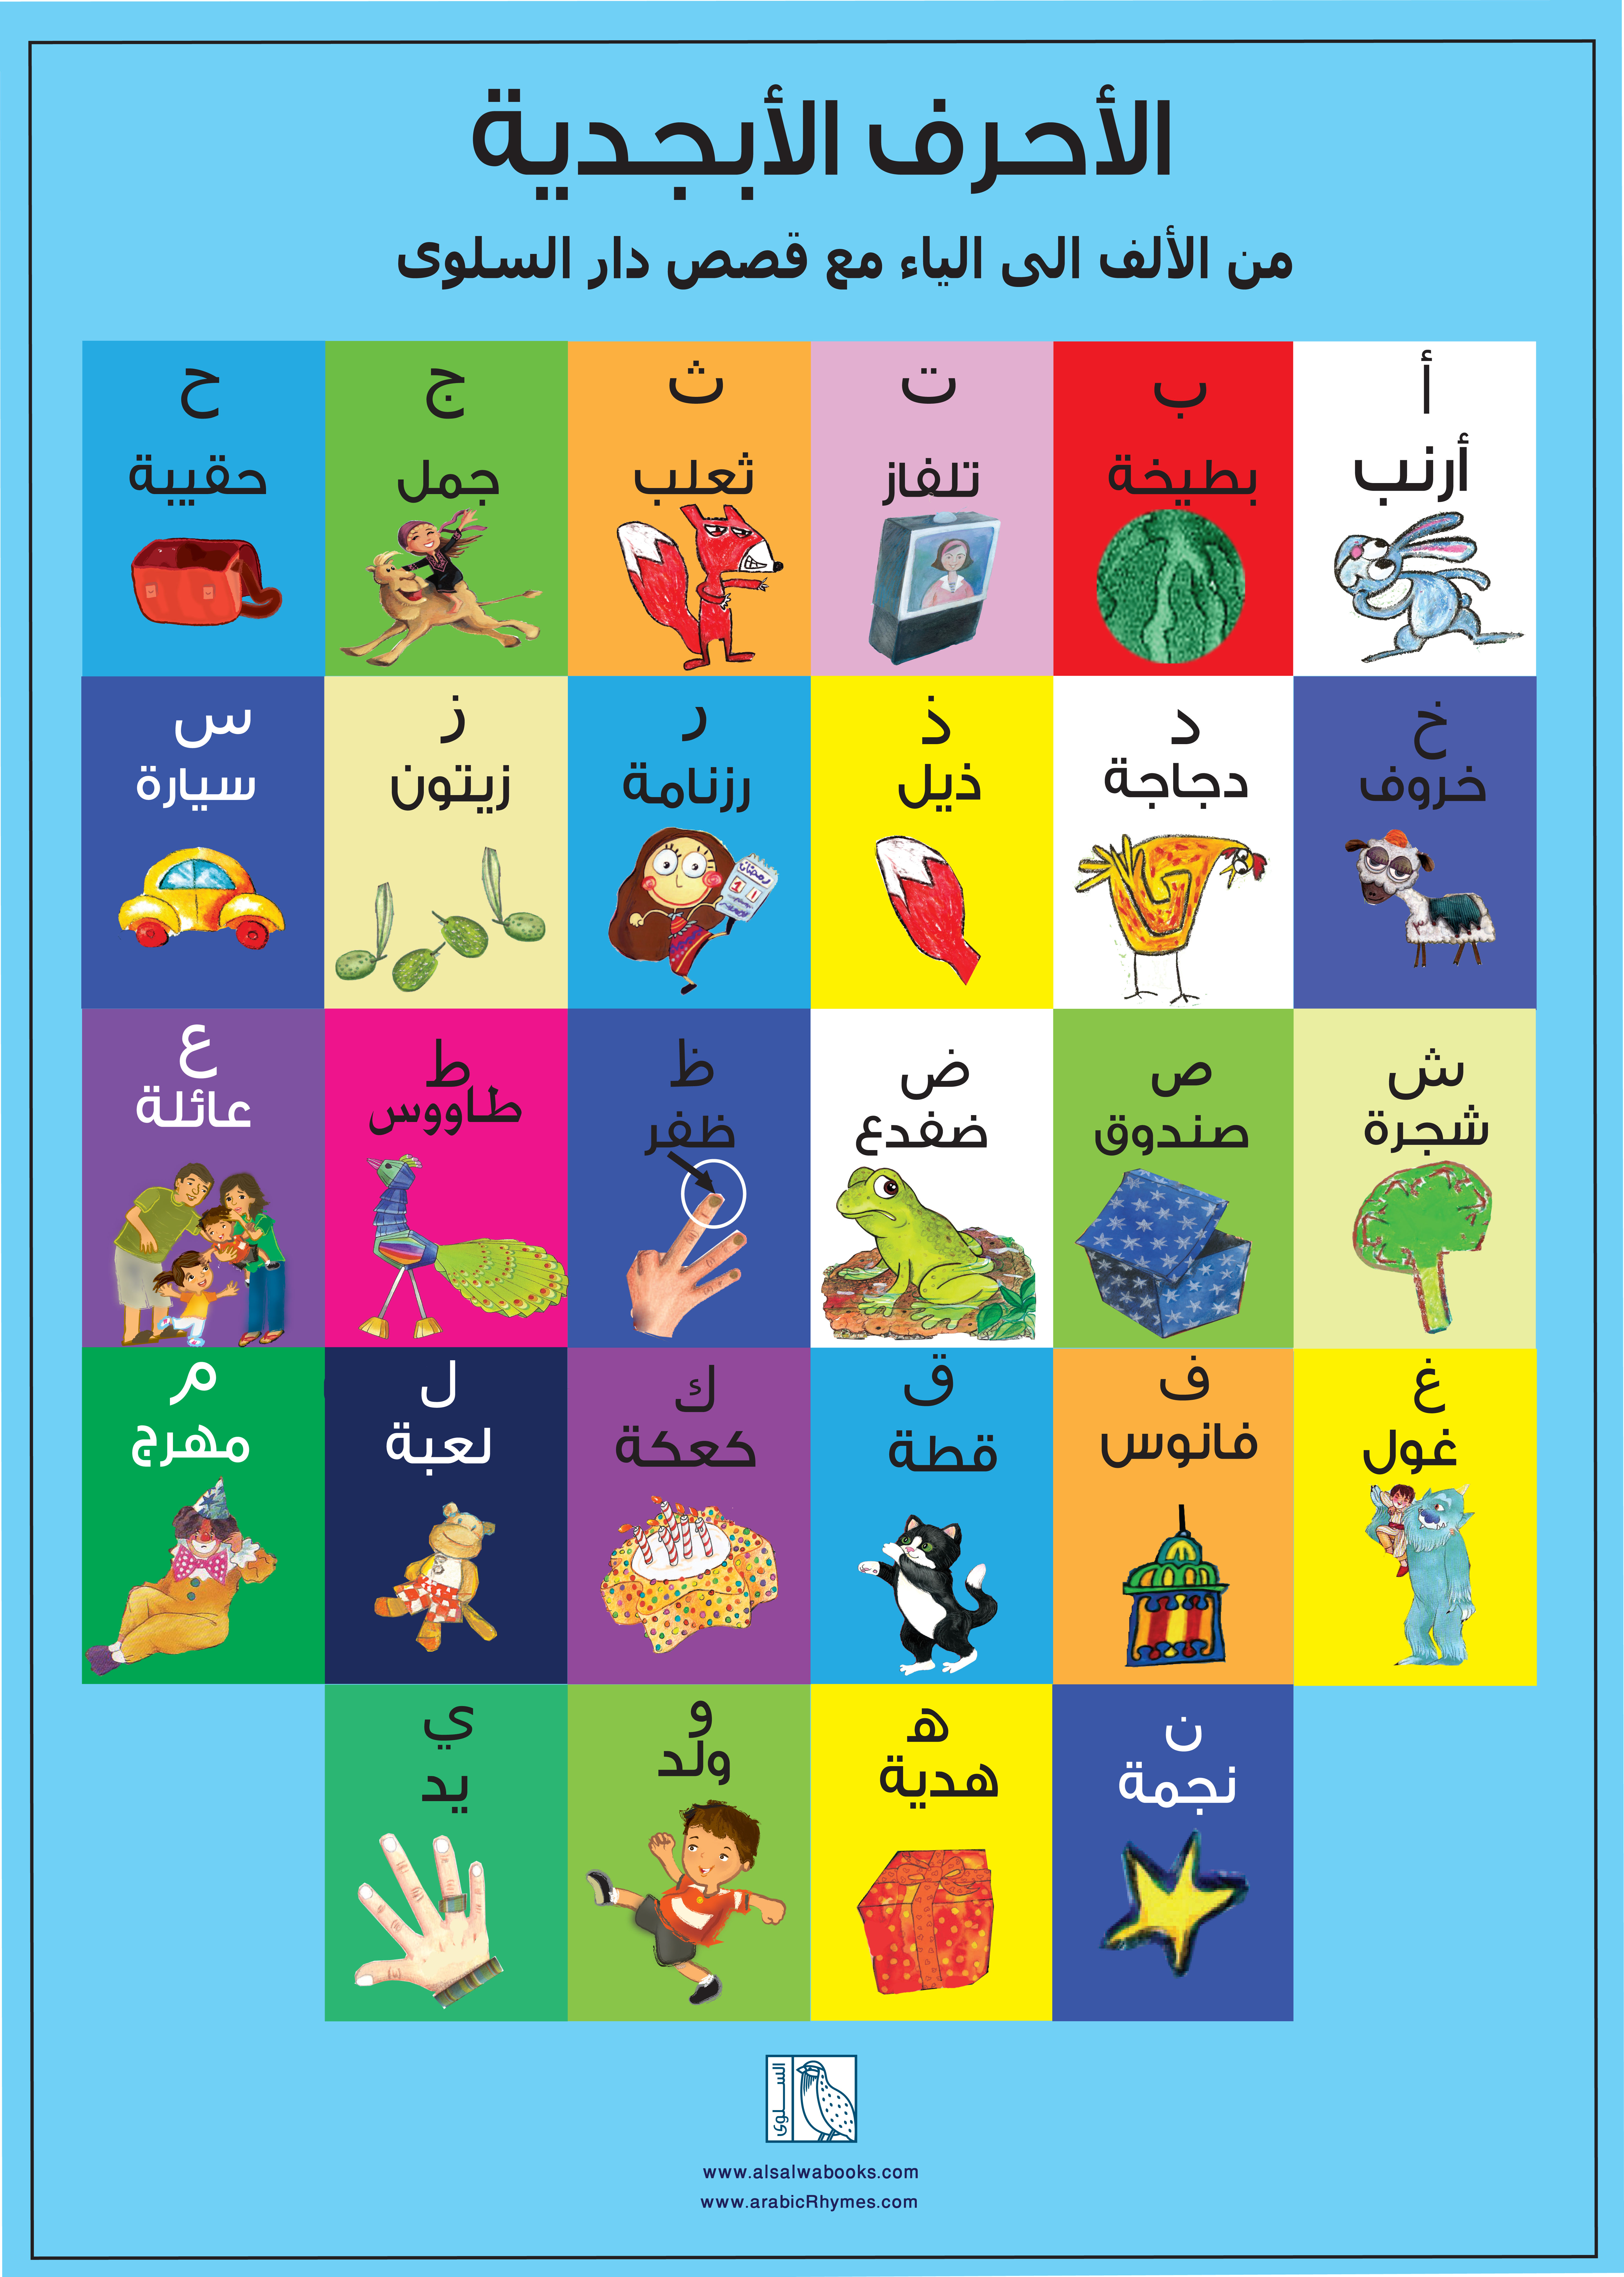 arabic-for-kids-arabic-letter-arabic-alphabet-learn-arabic-arabic-numb-arabic-education-clip